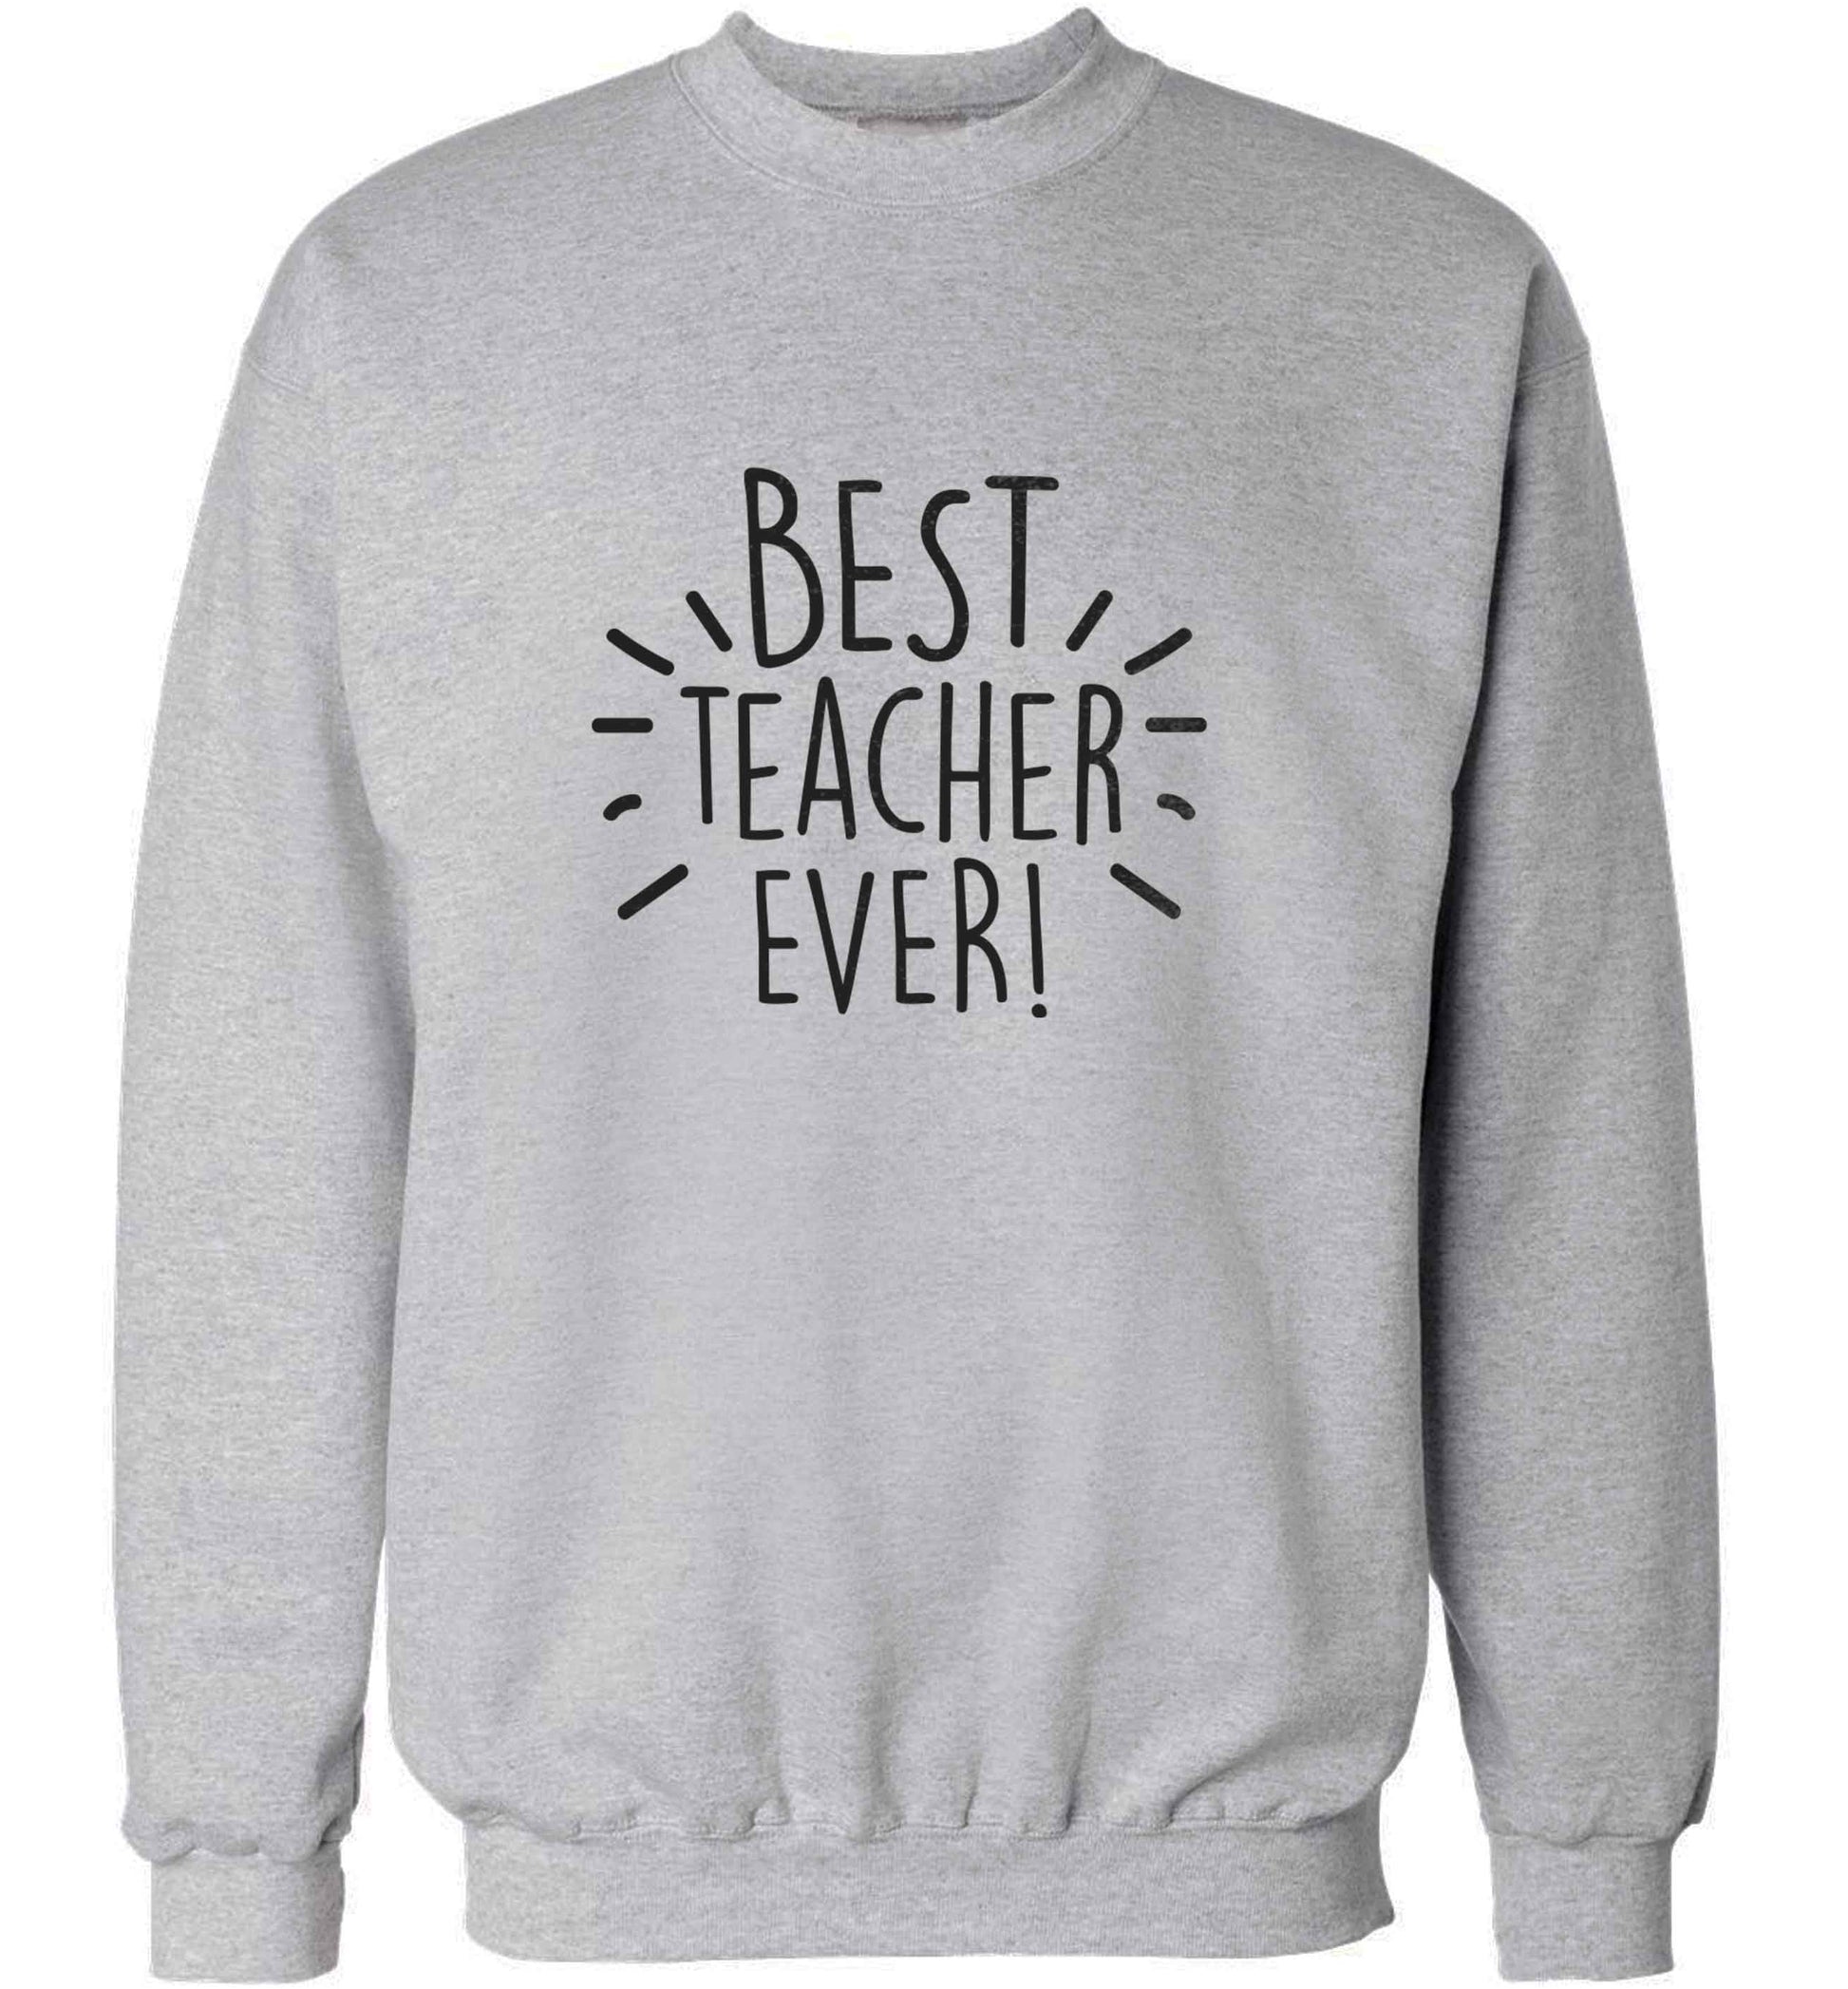 Best teacher ever! adult's unisex grey sweater 2XL